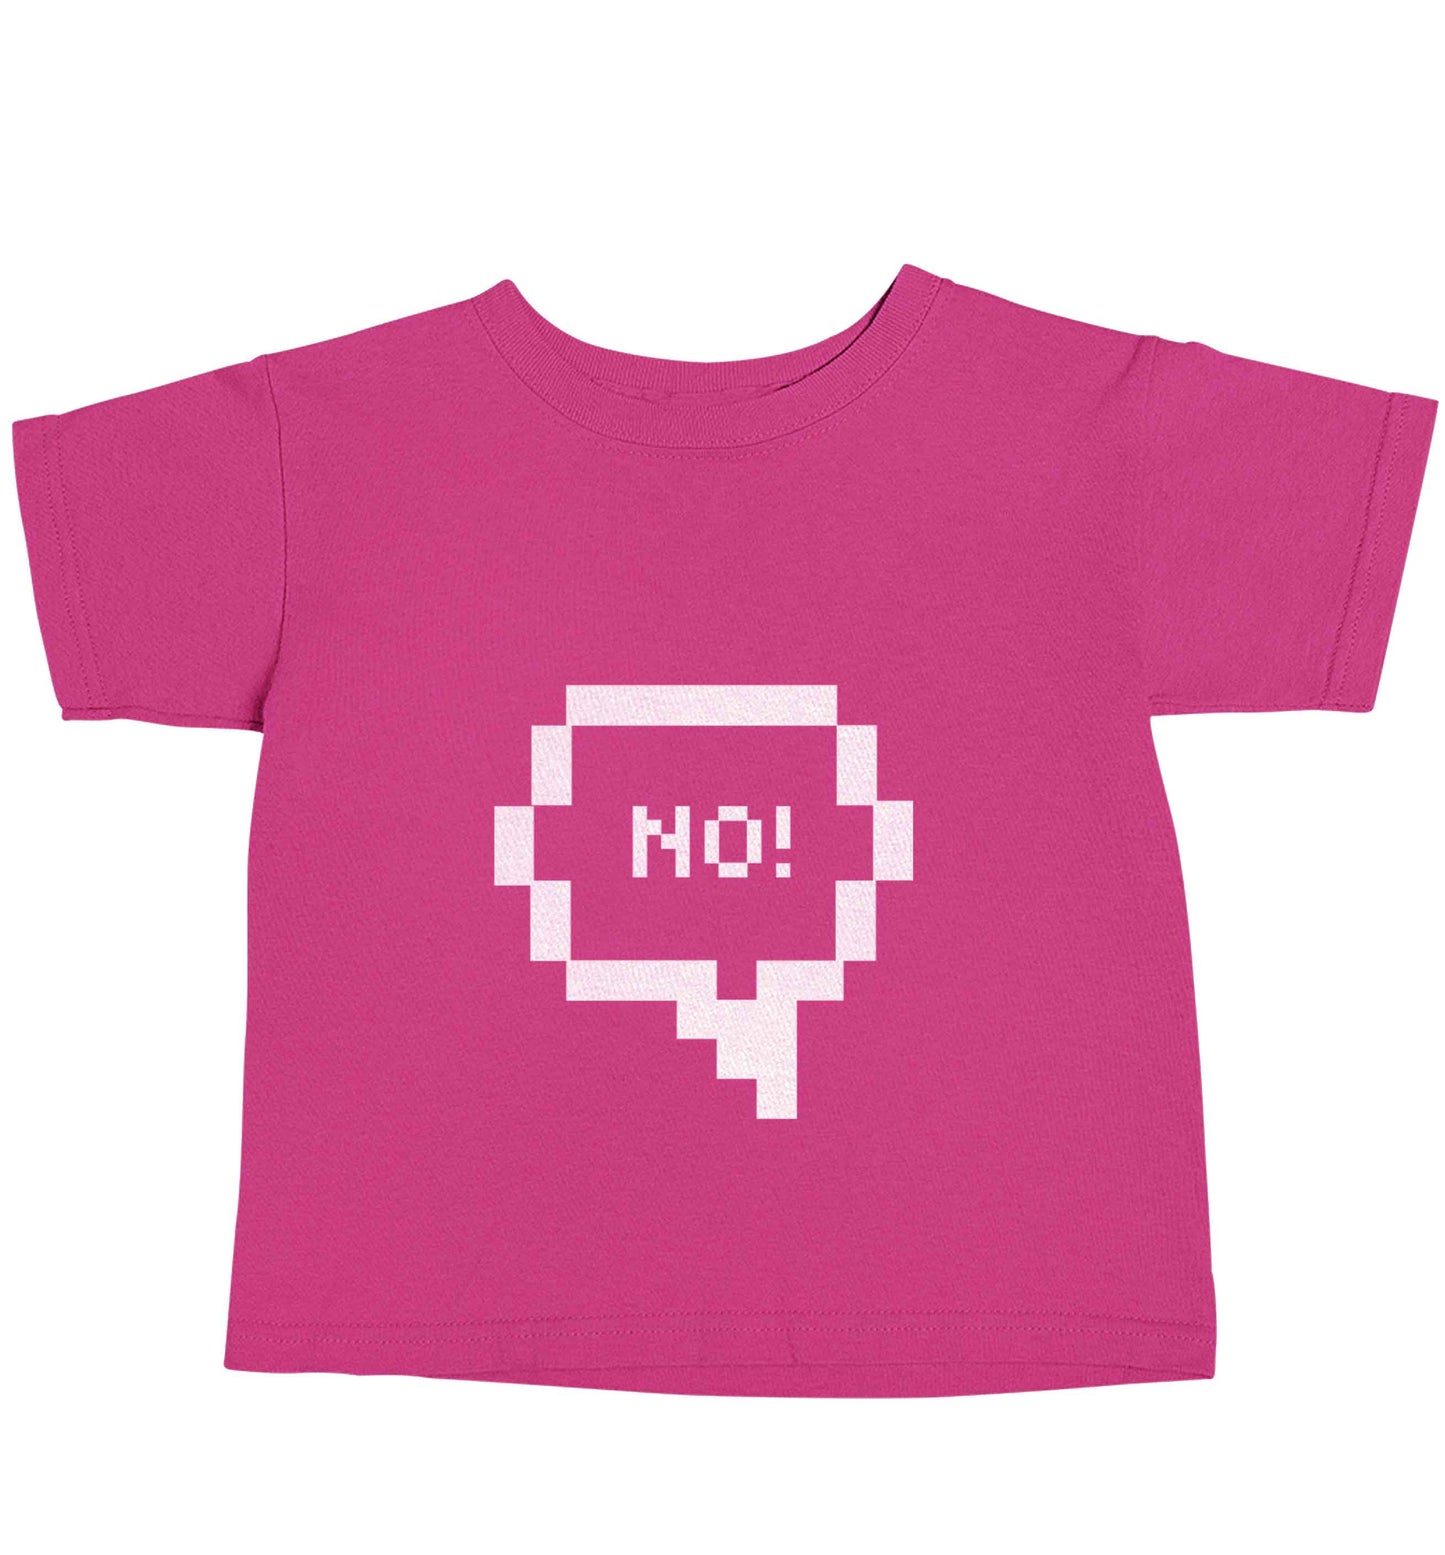 No pink baby toddler Tshirt 2 Years